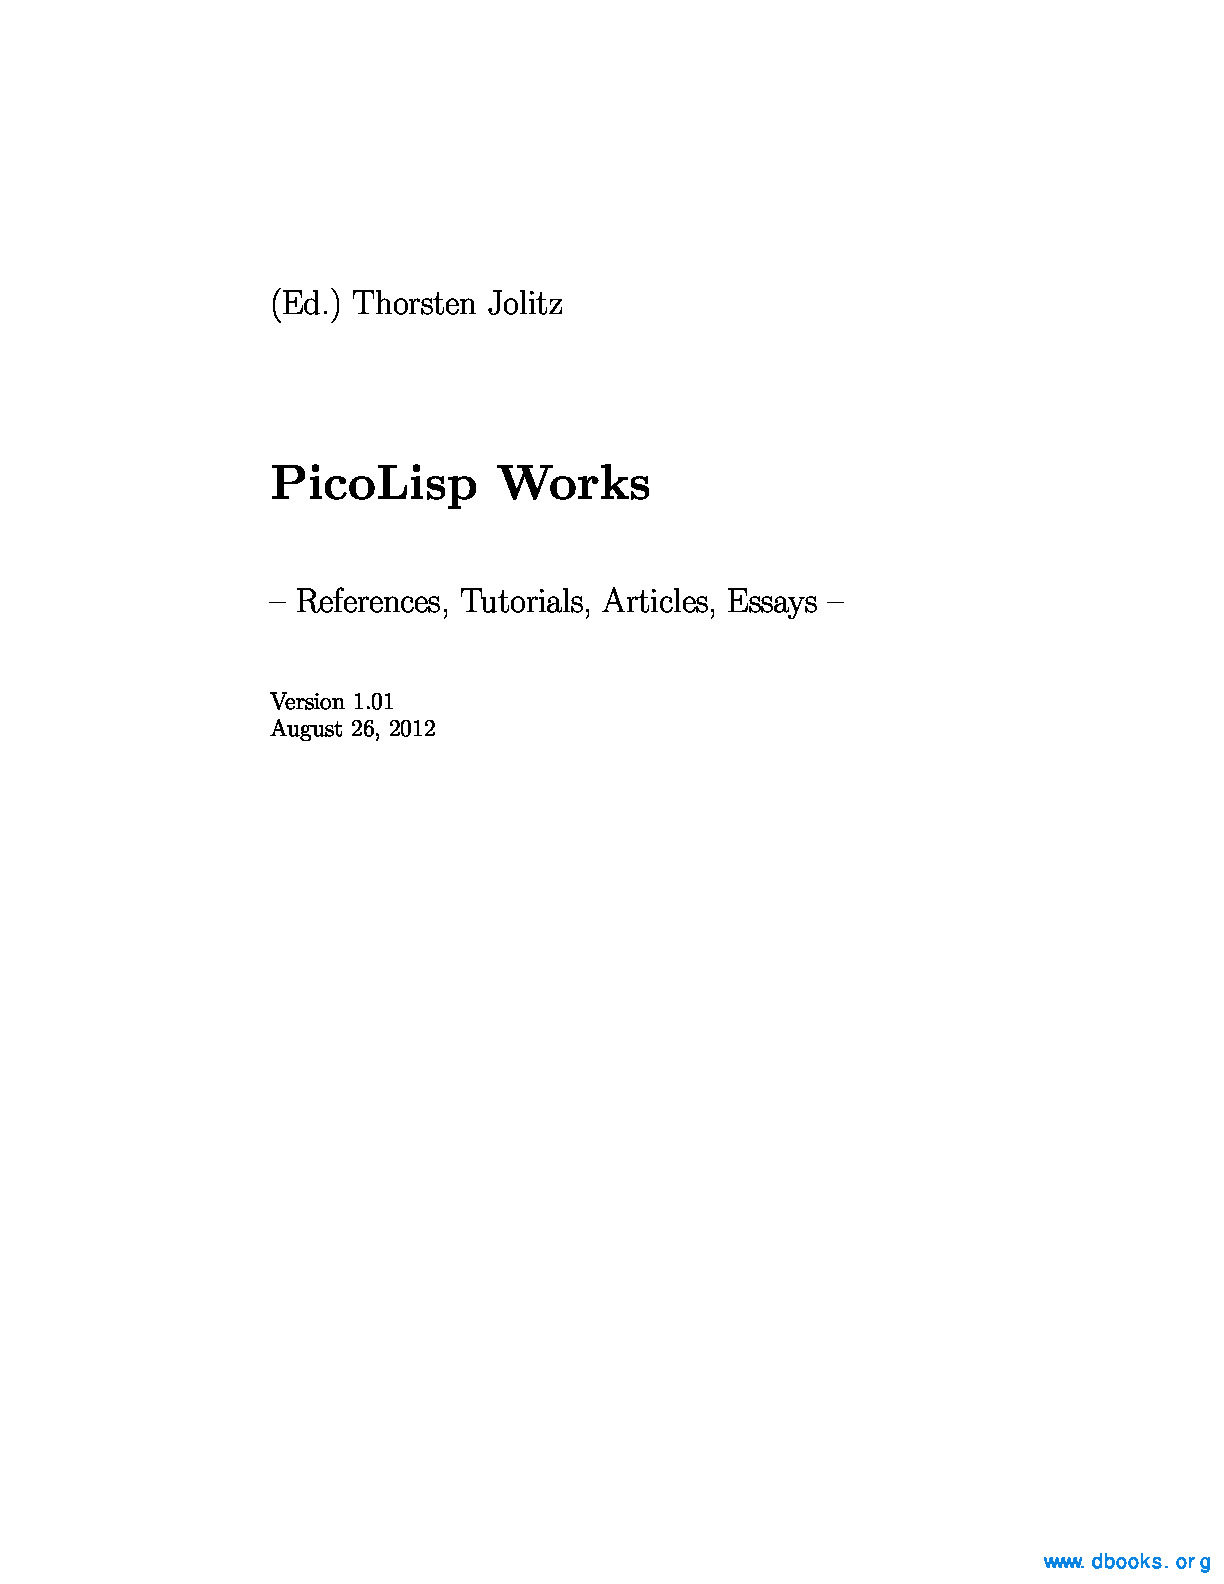 PicoLisp Works